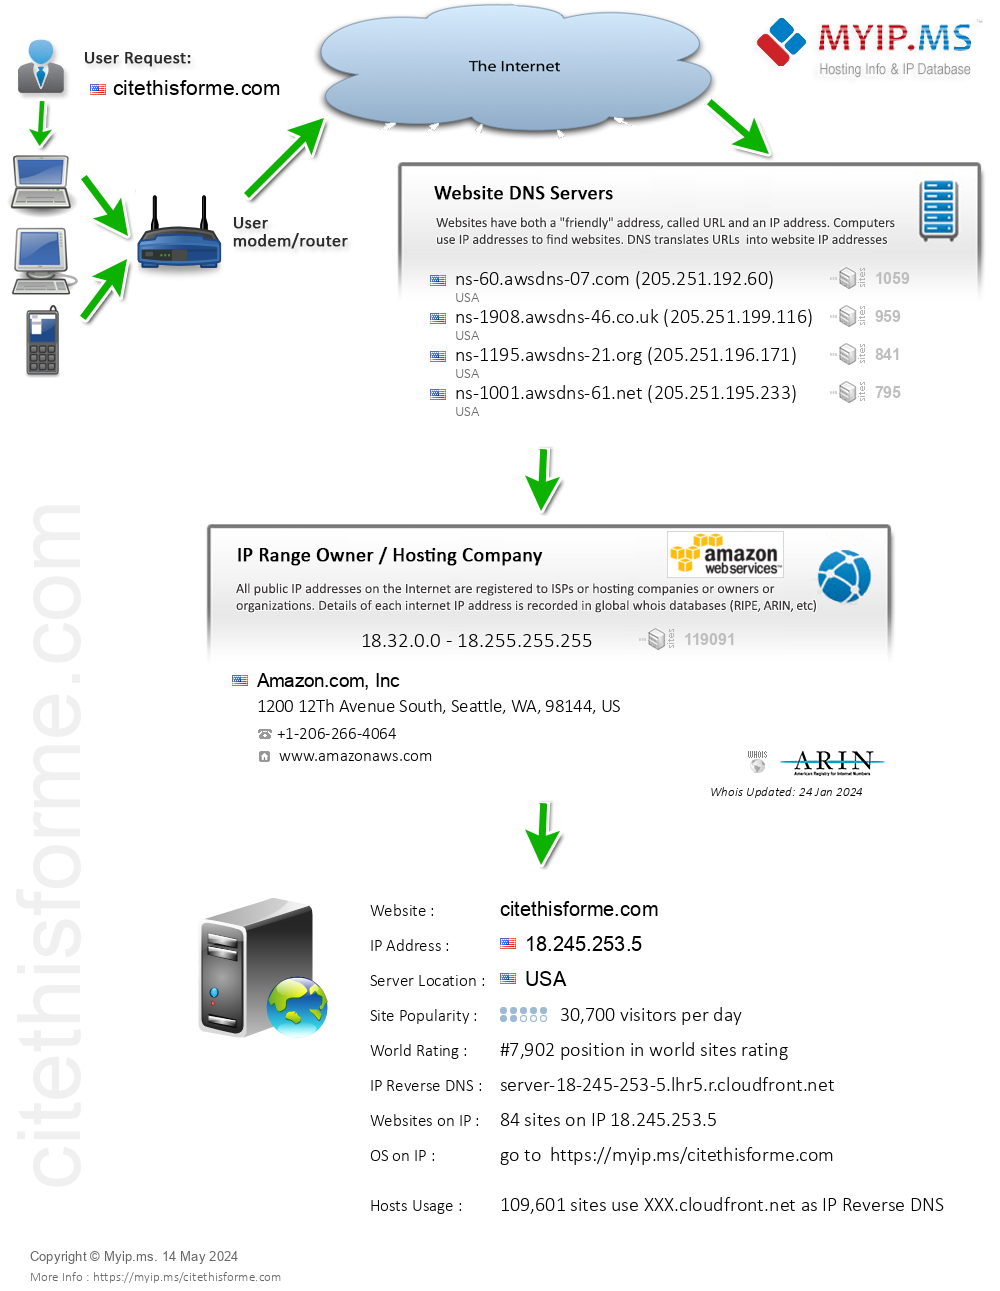 Citethisforme.com - Website Hosting Visual IP Diagram